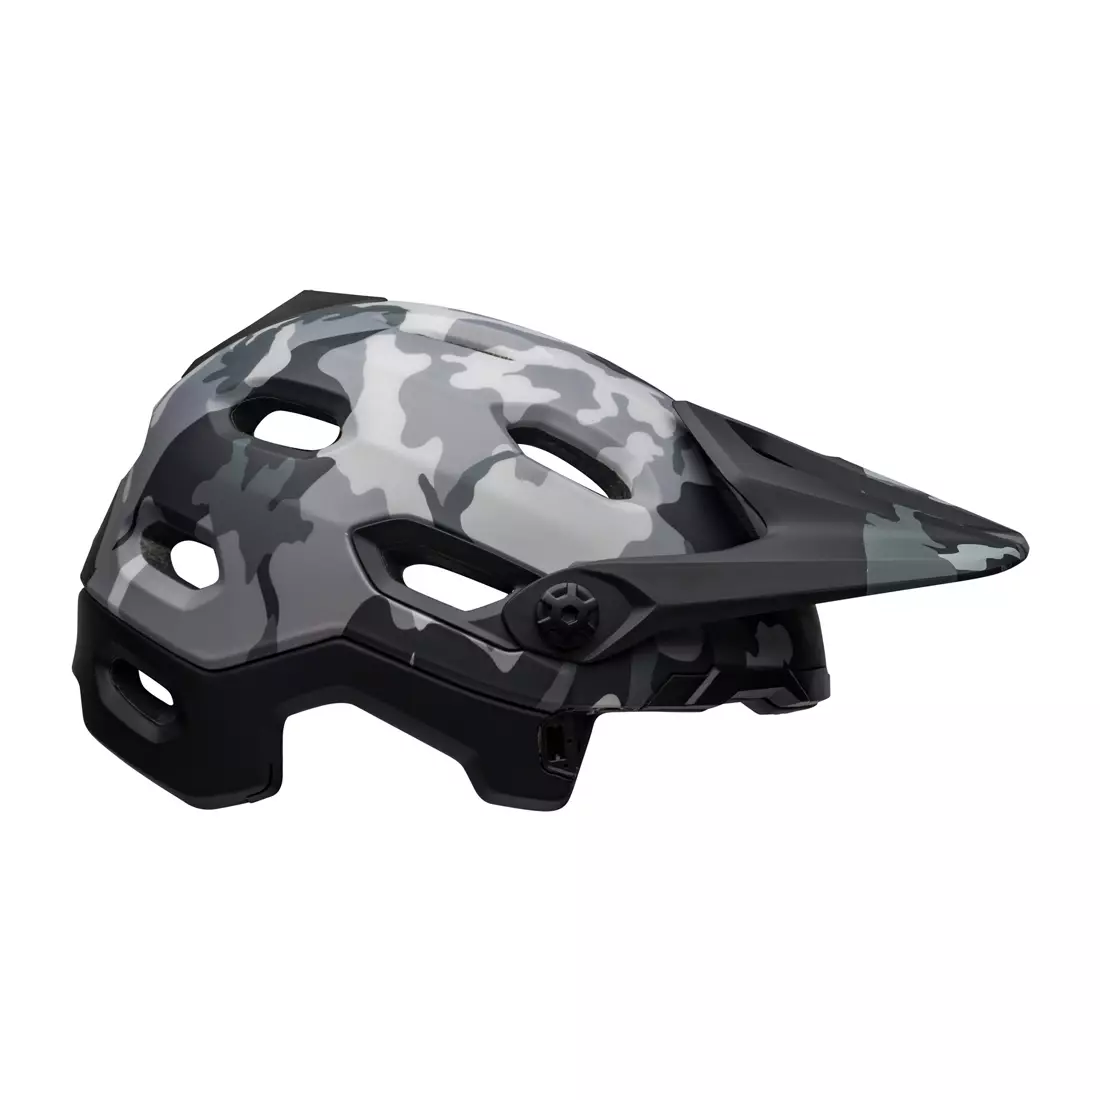 BELL SUPER DH MIPS SPHERICAL teljes arcú kerékpáros sisak, matte gloss black camo